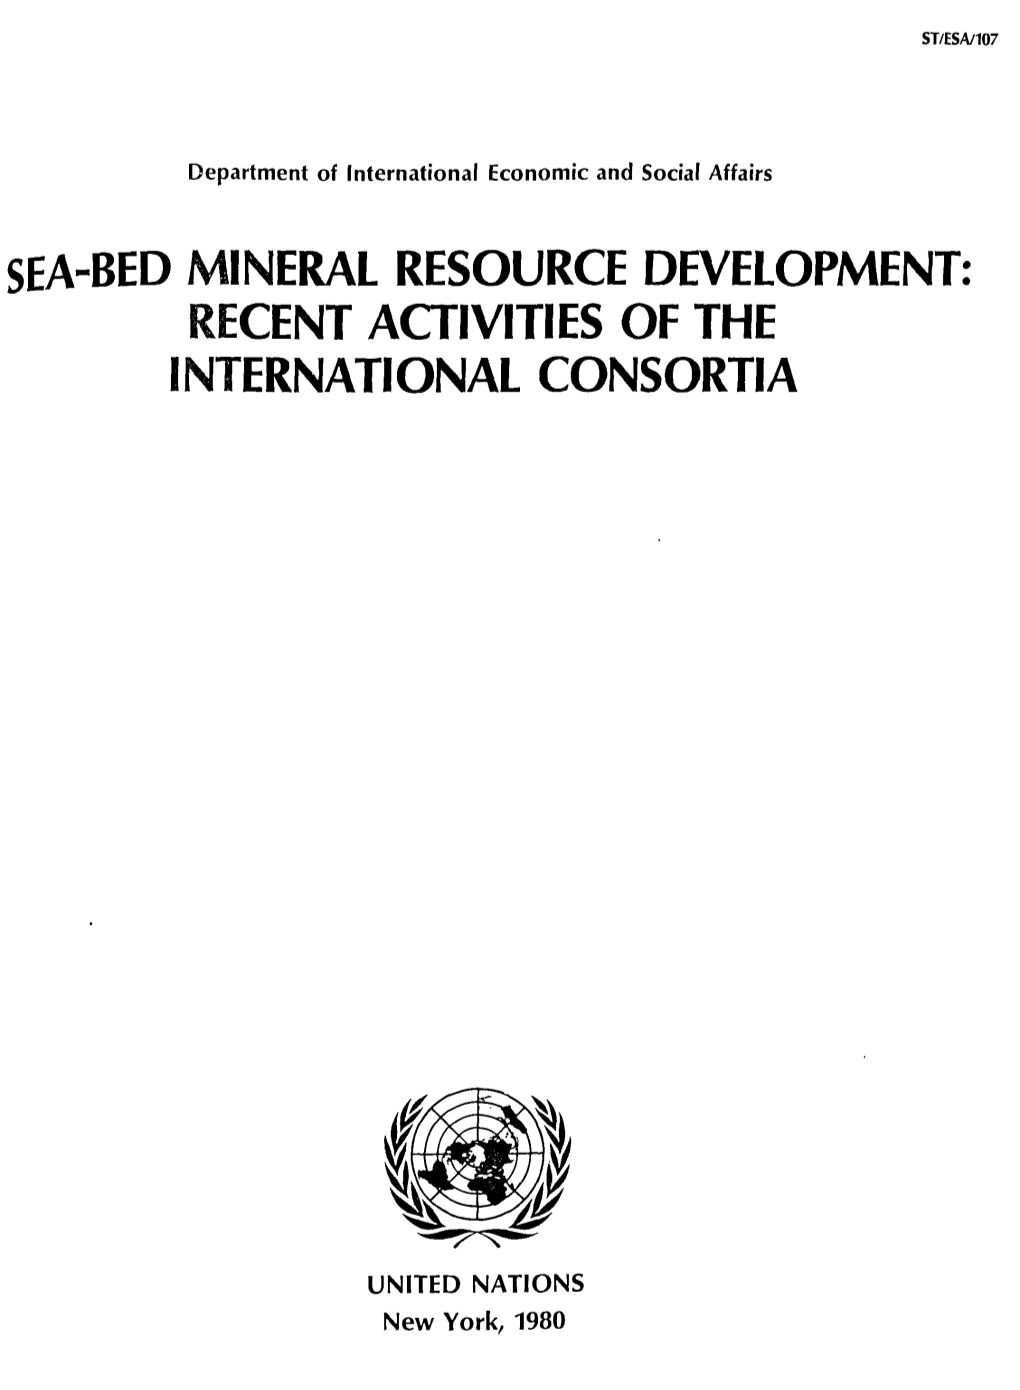 Sea-Bed Mineral Resource Development: Recent Activities of the International Consortia